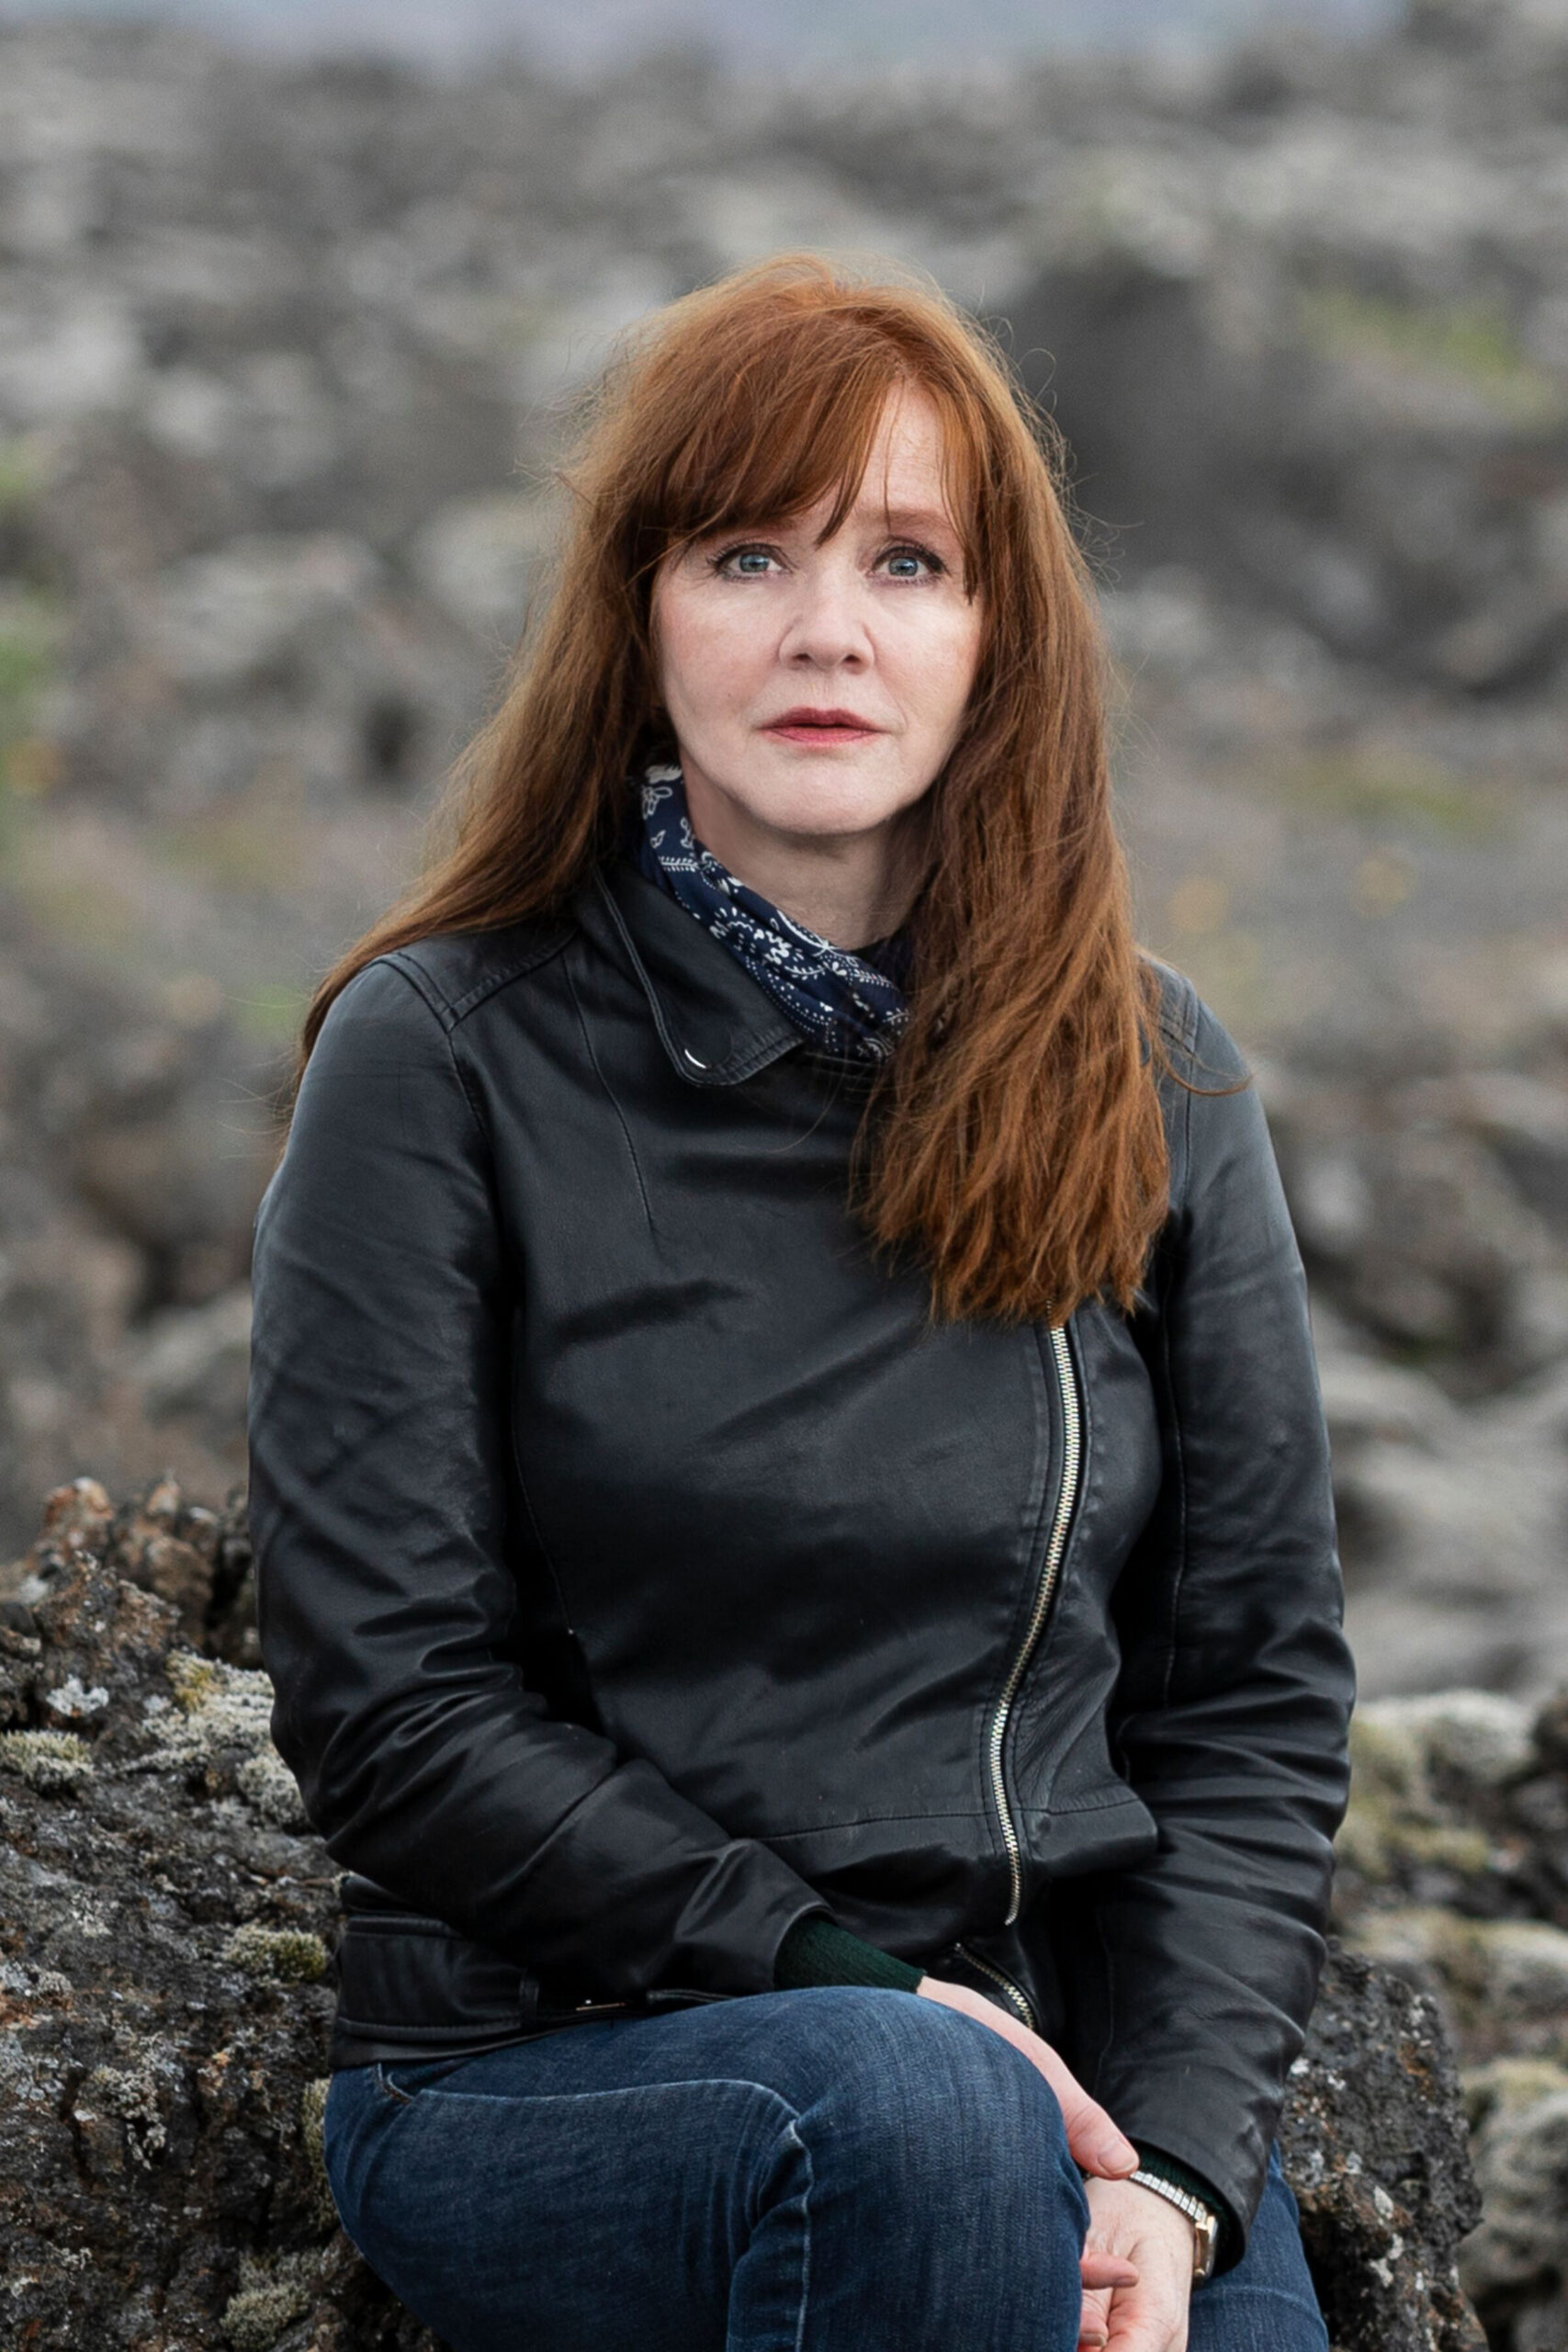 Prisvindende forfatter Auður Ava Ólafsdóttir gæster Roskilde Domkirke